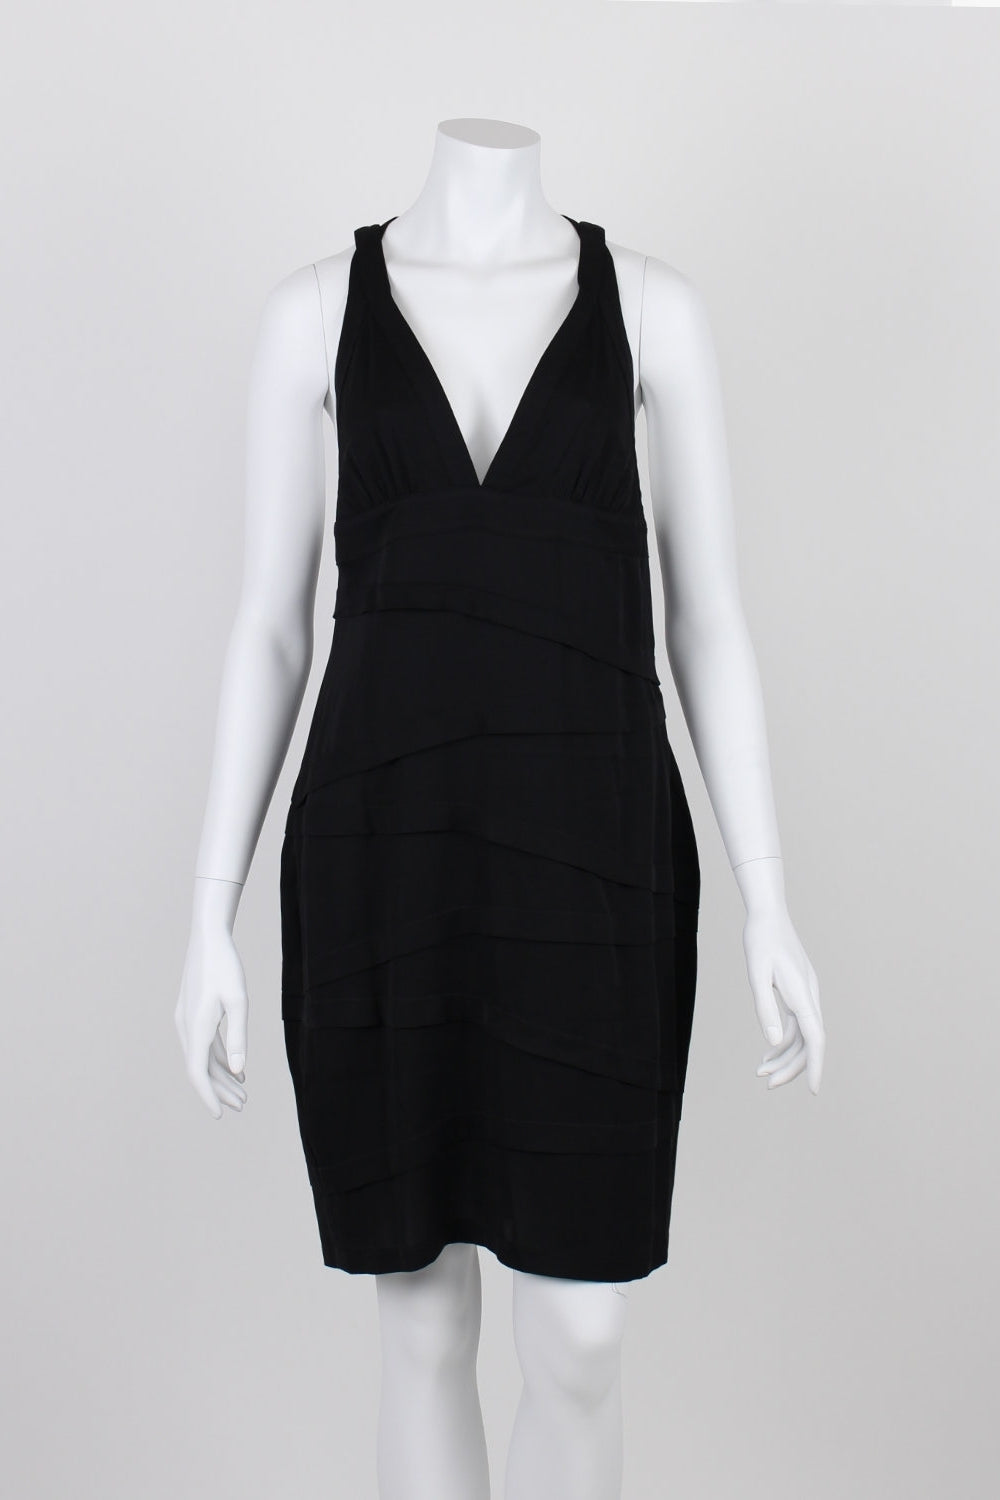 Ginger & Smart Black Strappy Silk Dress 12